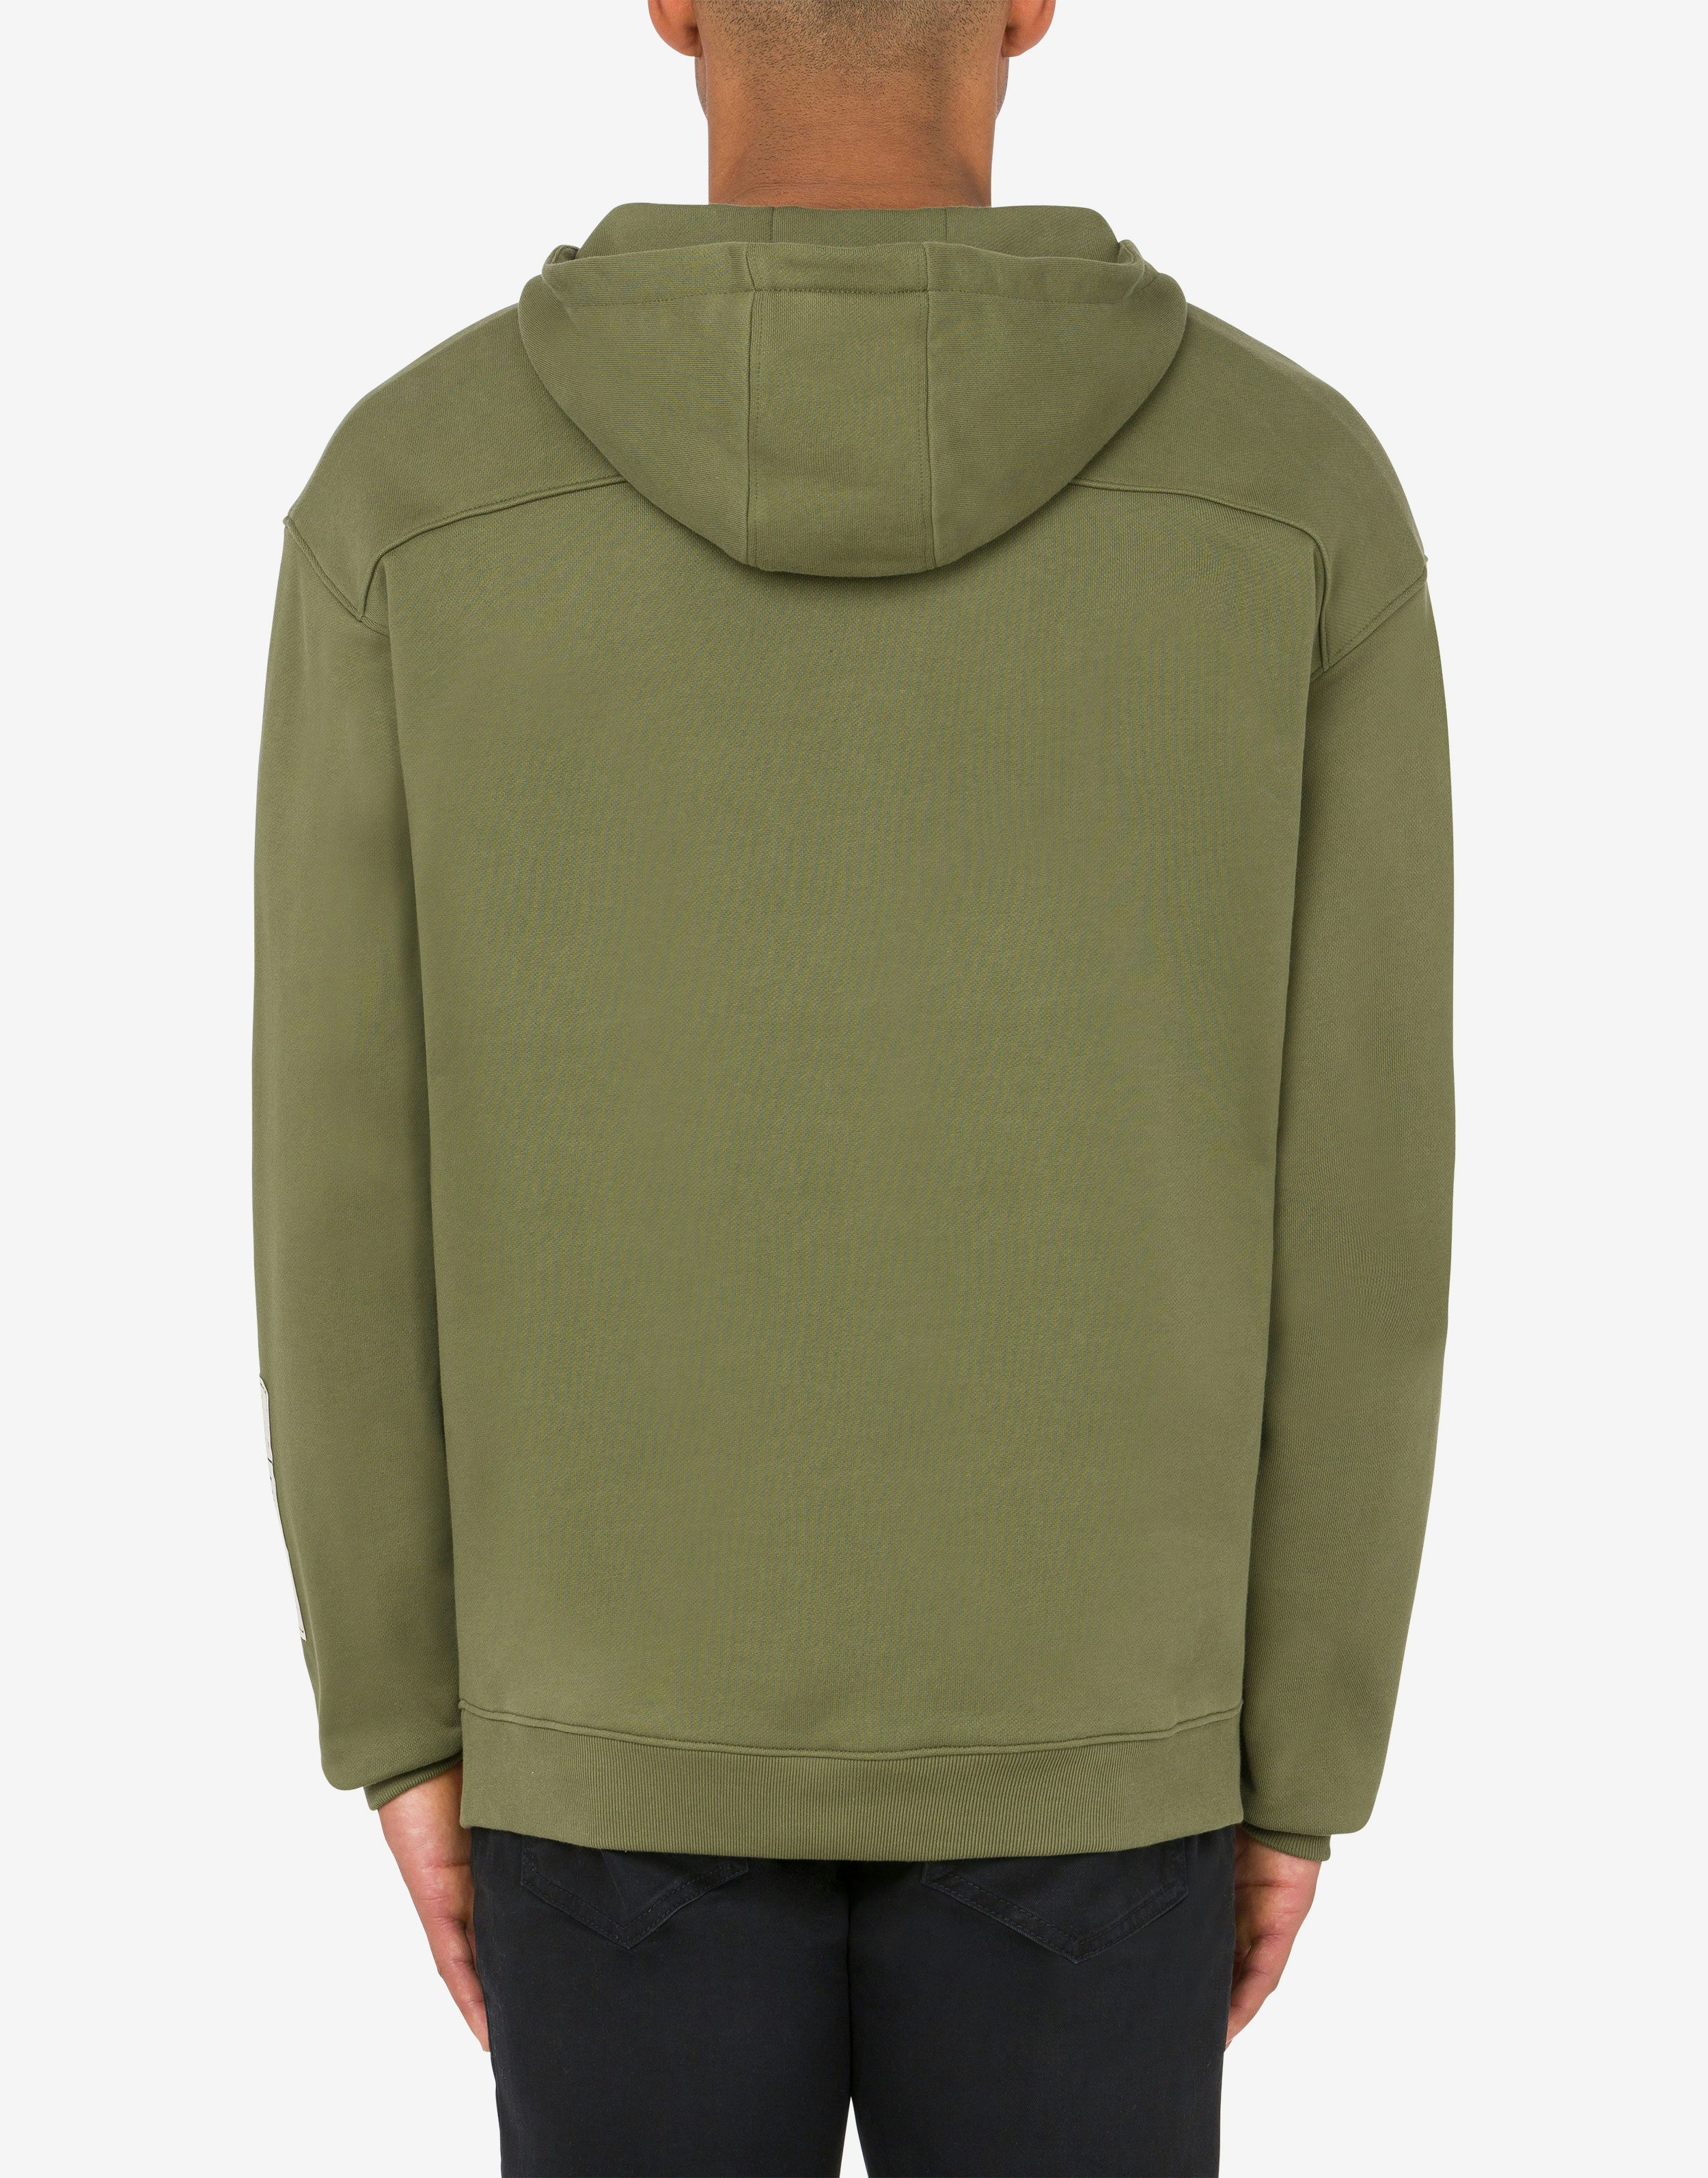 Military Label organic cotton sweatshirt 1